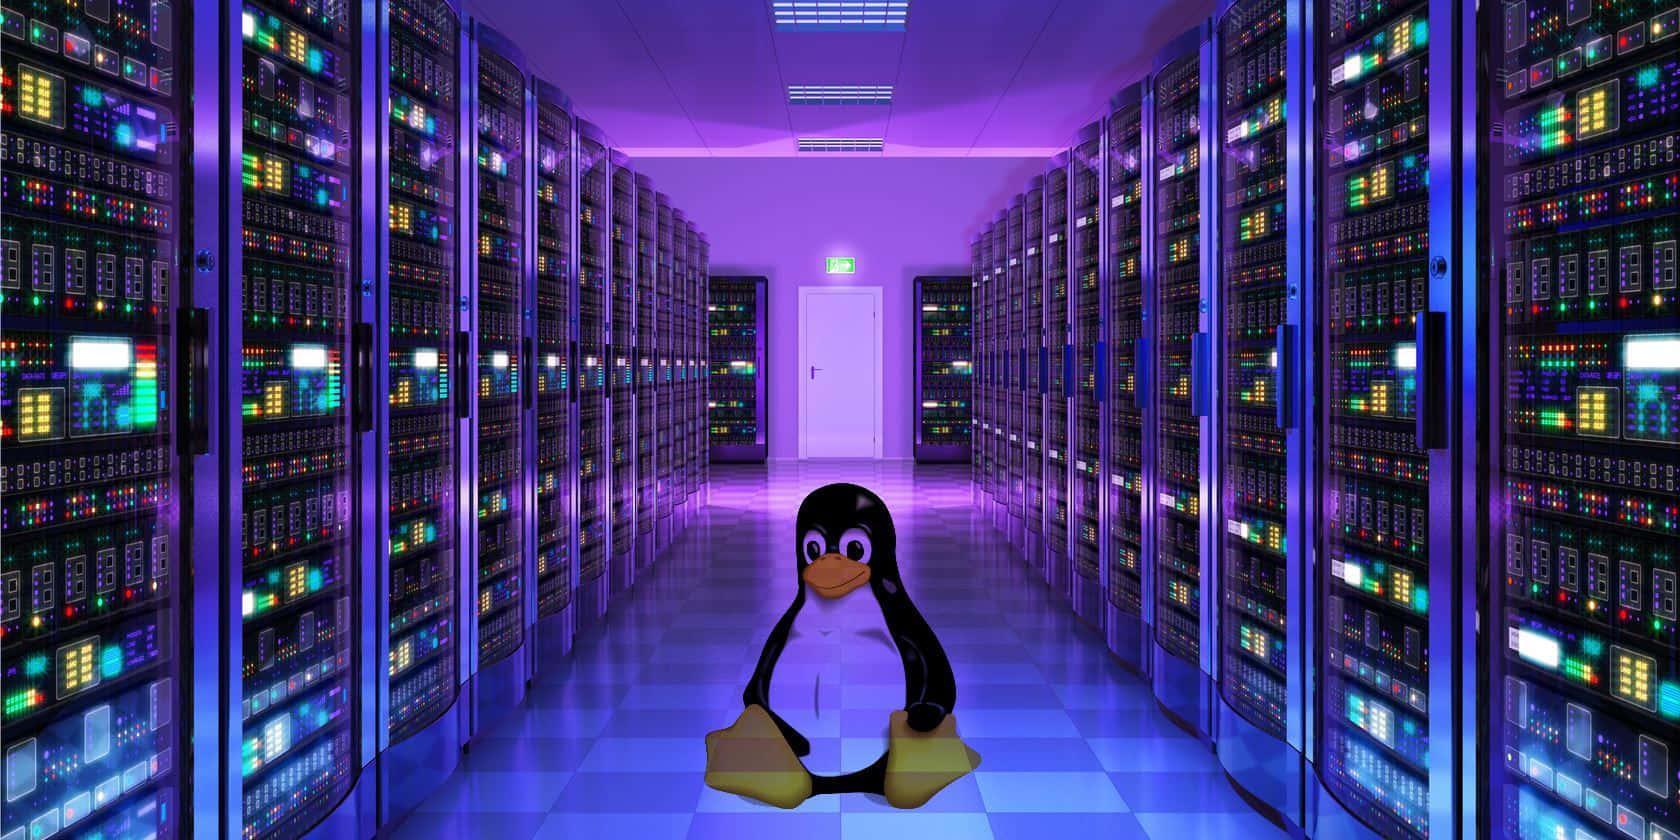 Linux-server